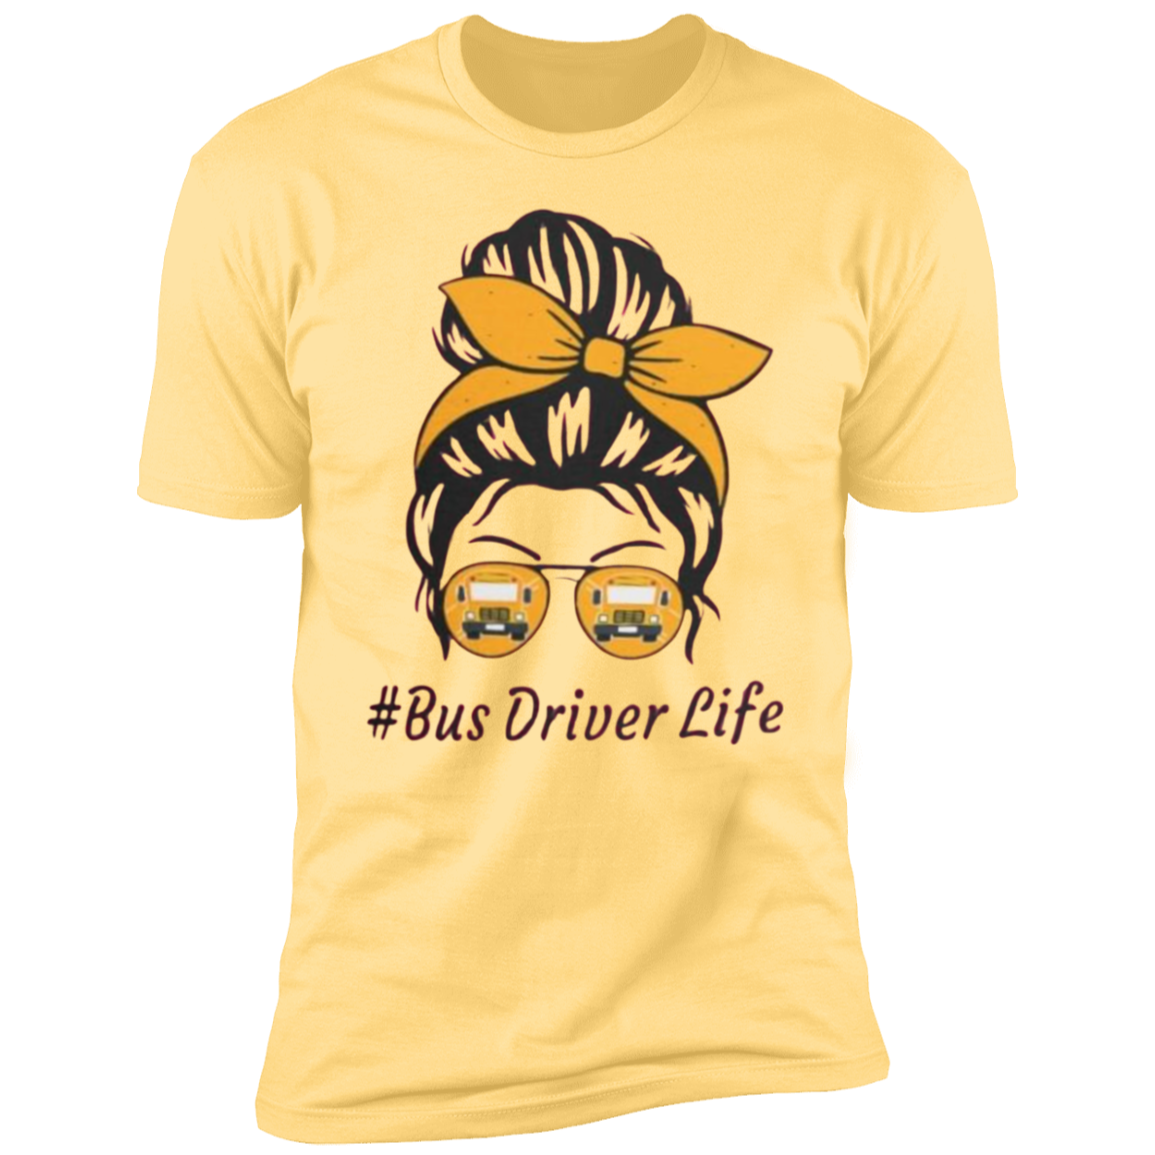 Bus Driver Life! Tee